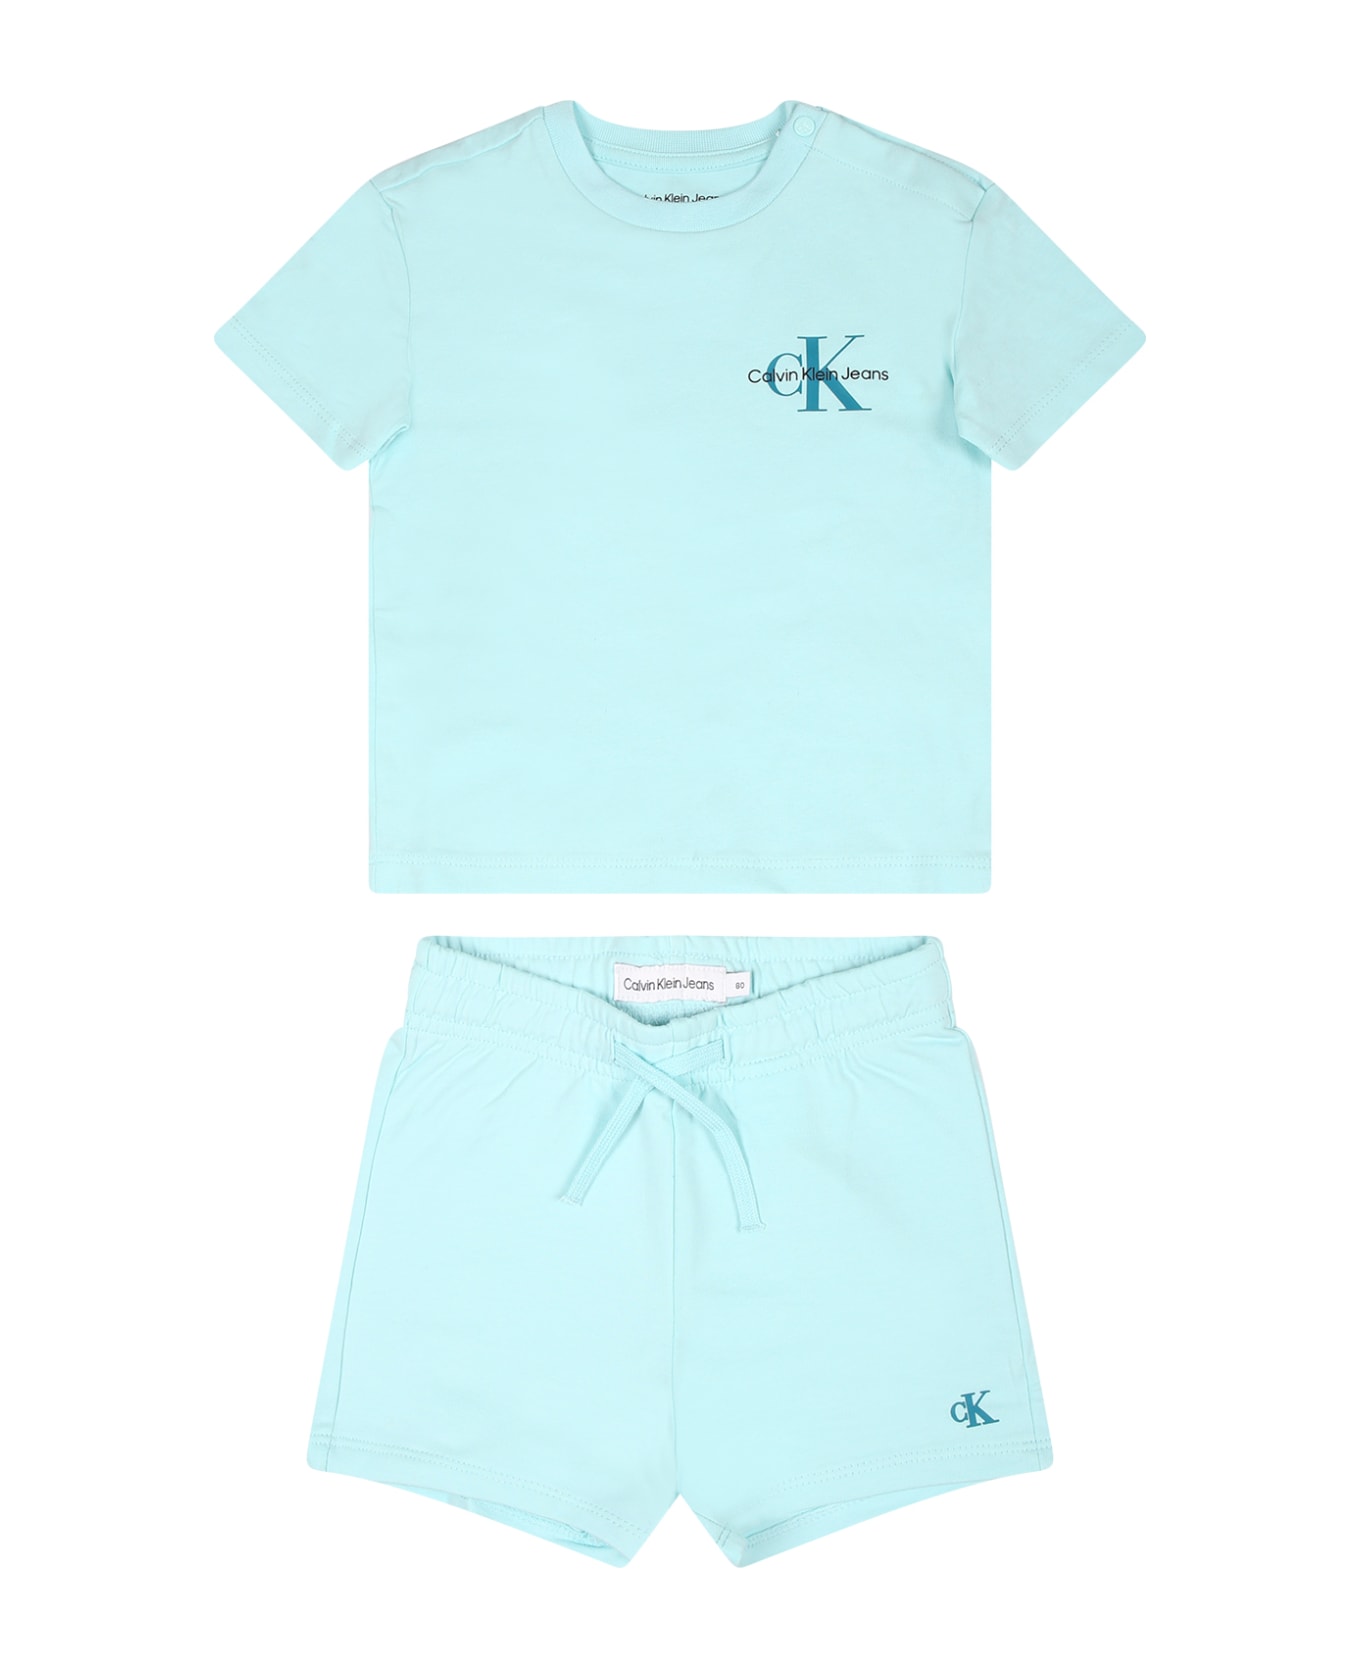 Calvin Klein Light Blue Suit For Babykids With Logo - Light Blue